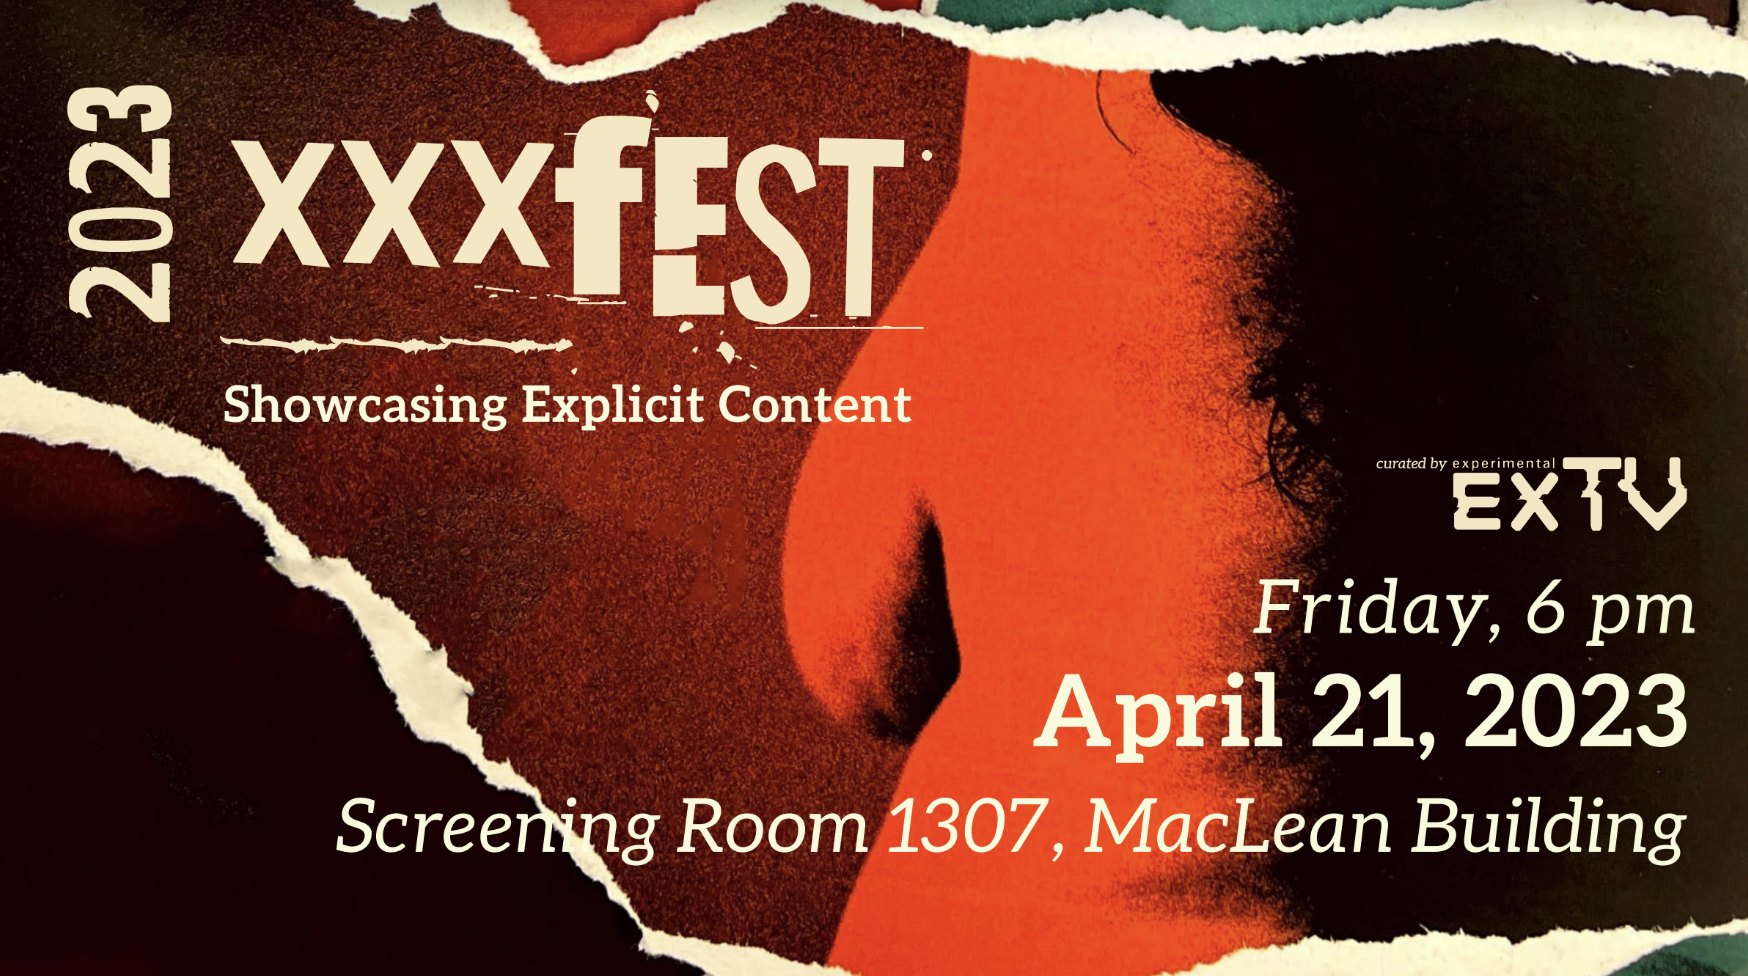 XXXfest 2023 Screening Poster